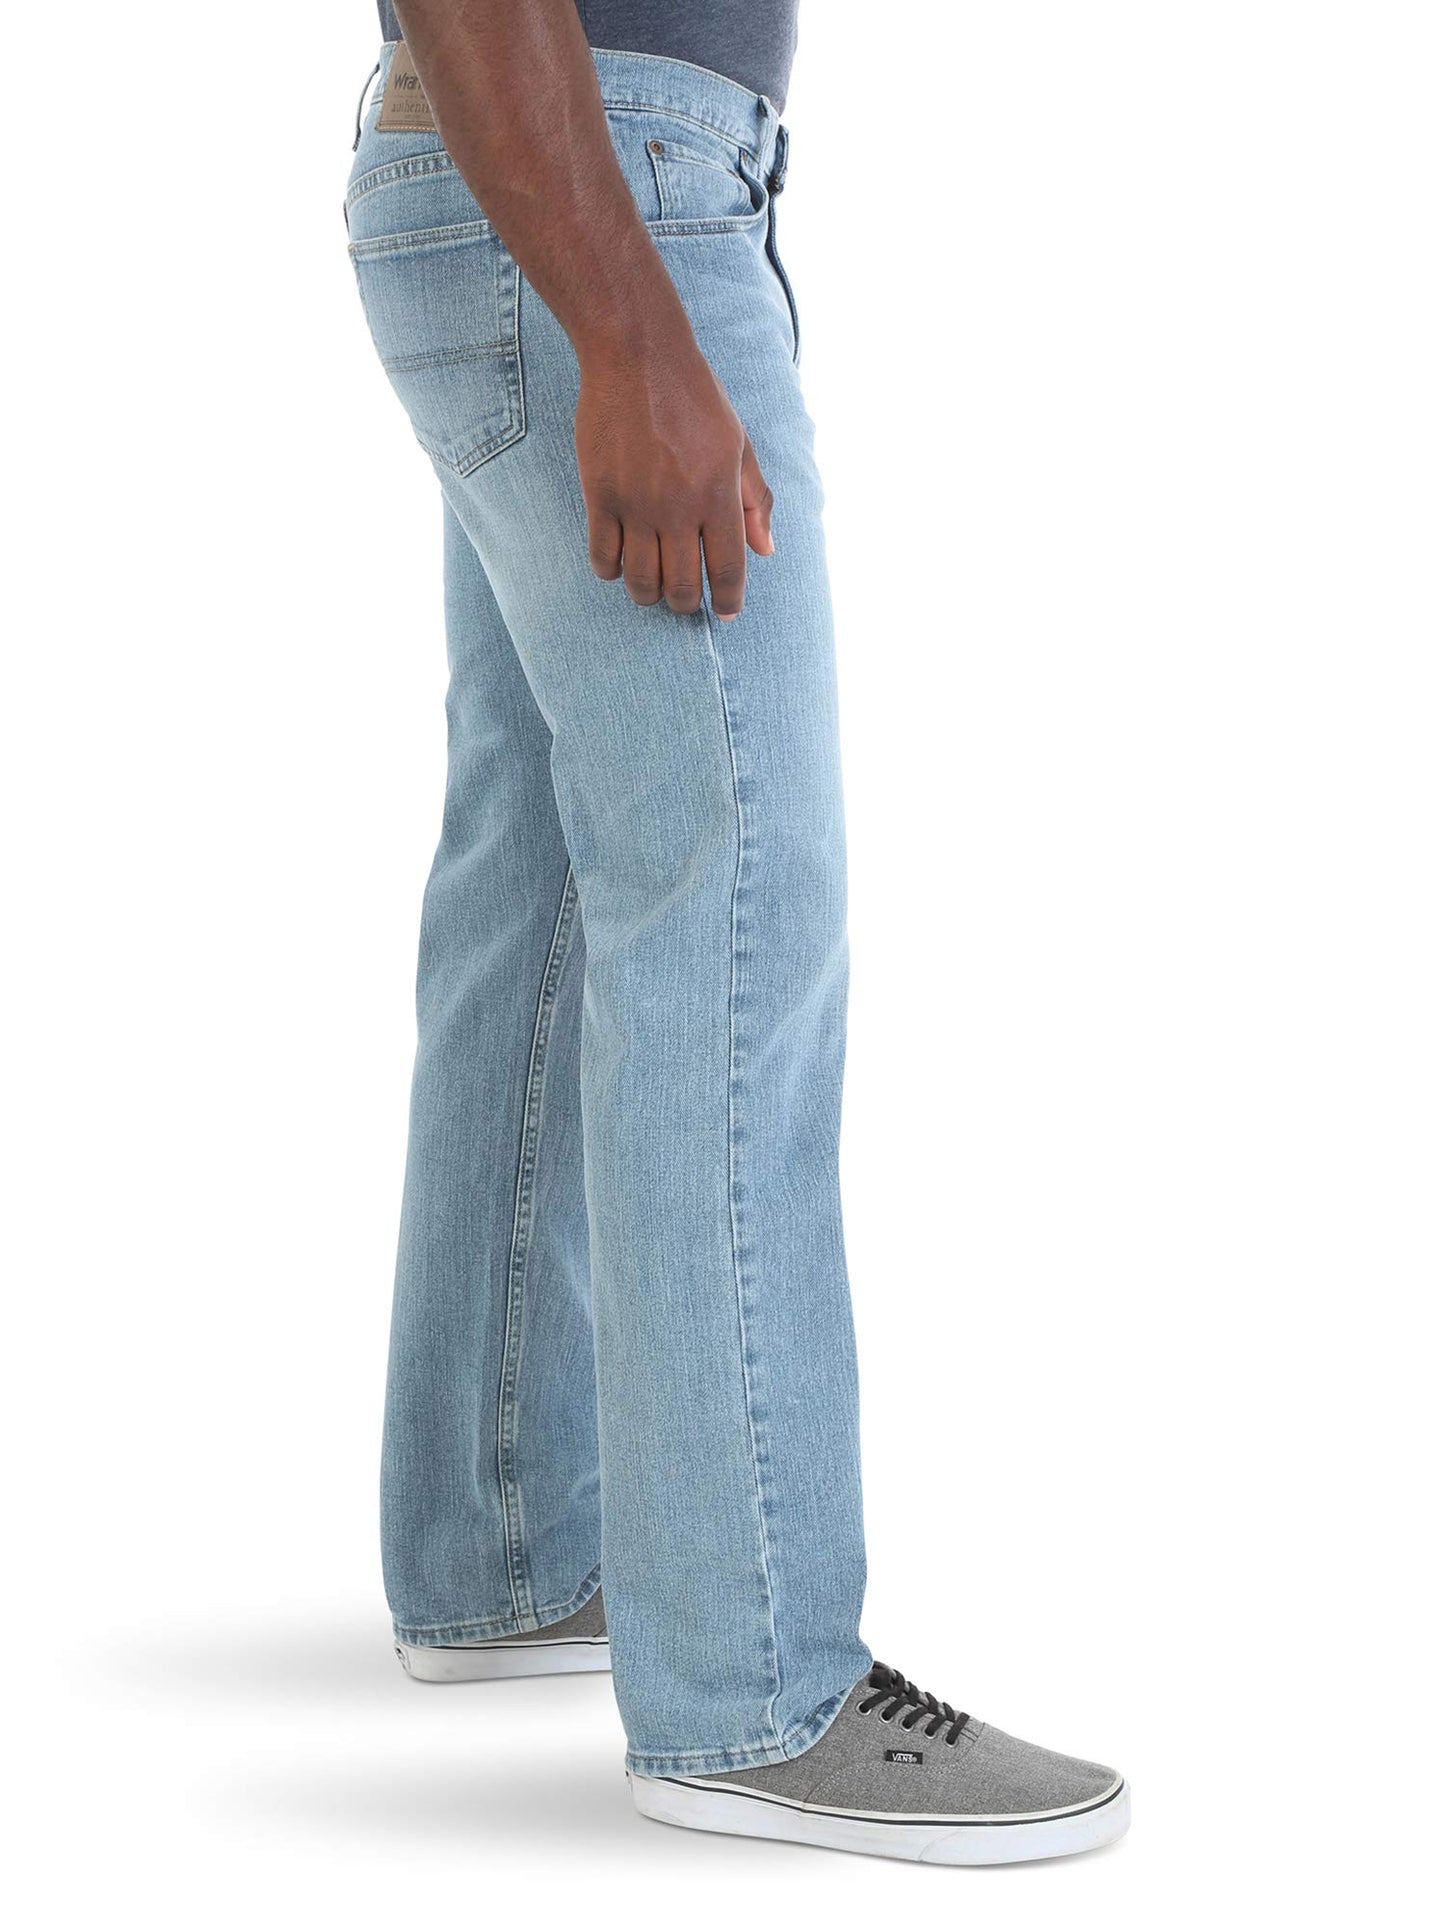 Wrangler Authentics Men's Classic 5-Pocket Relaxed Fit Jean, Stonewash Flex, 38W x 34L